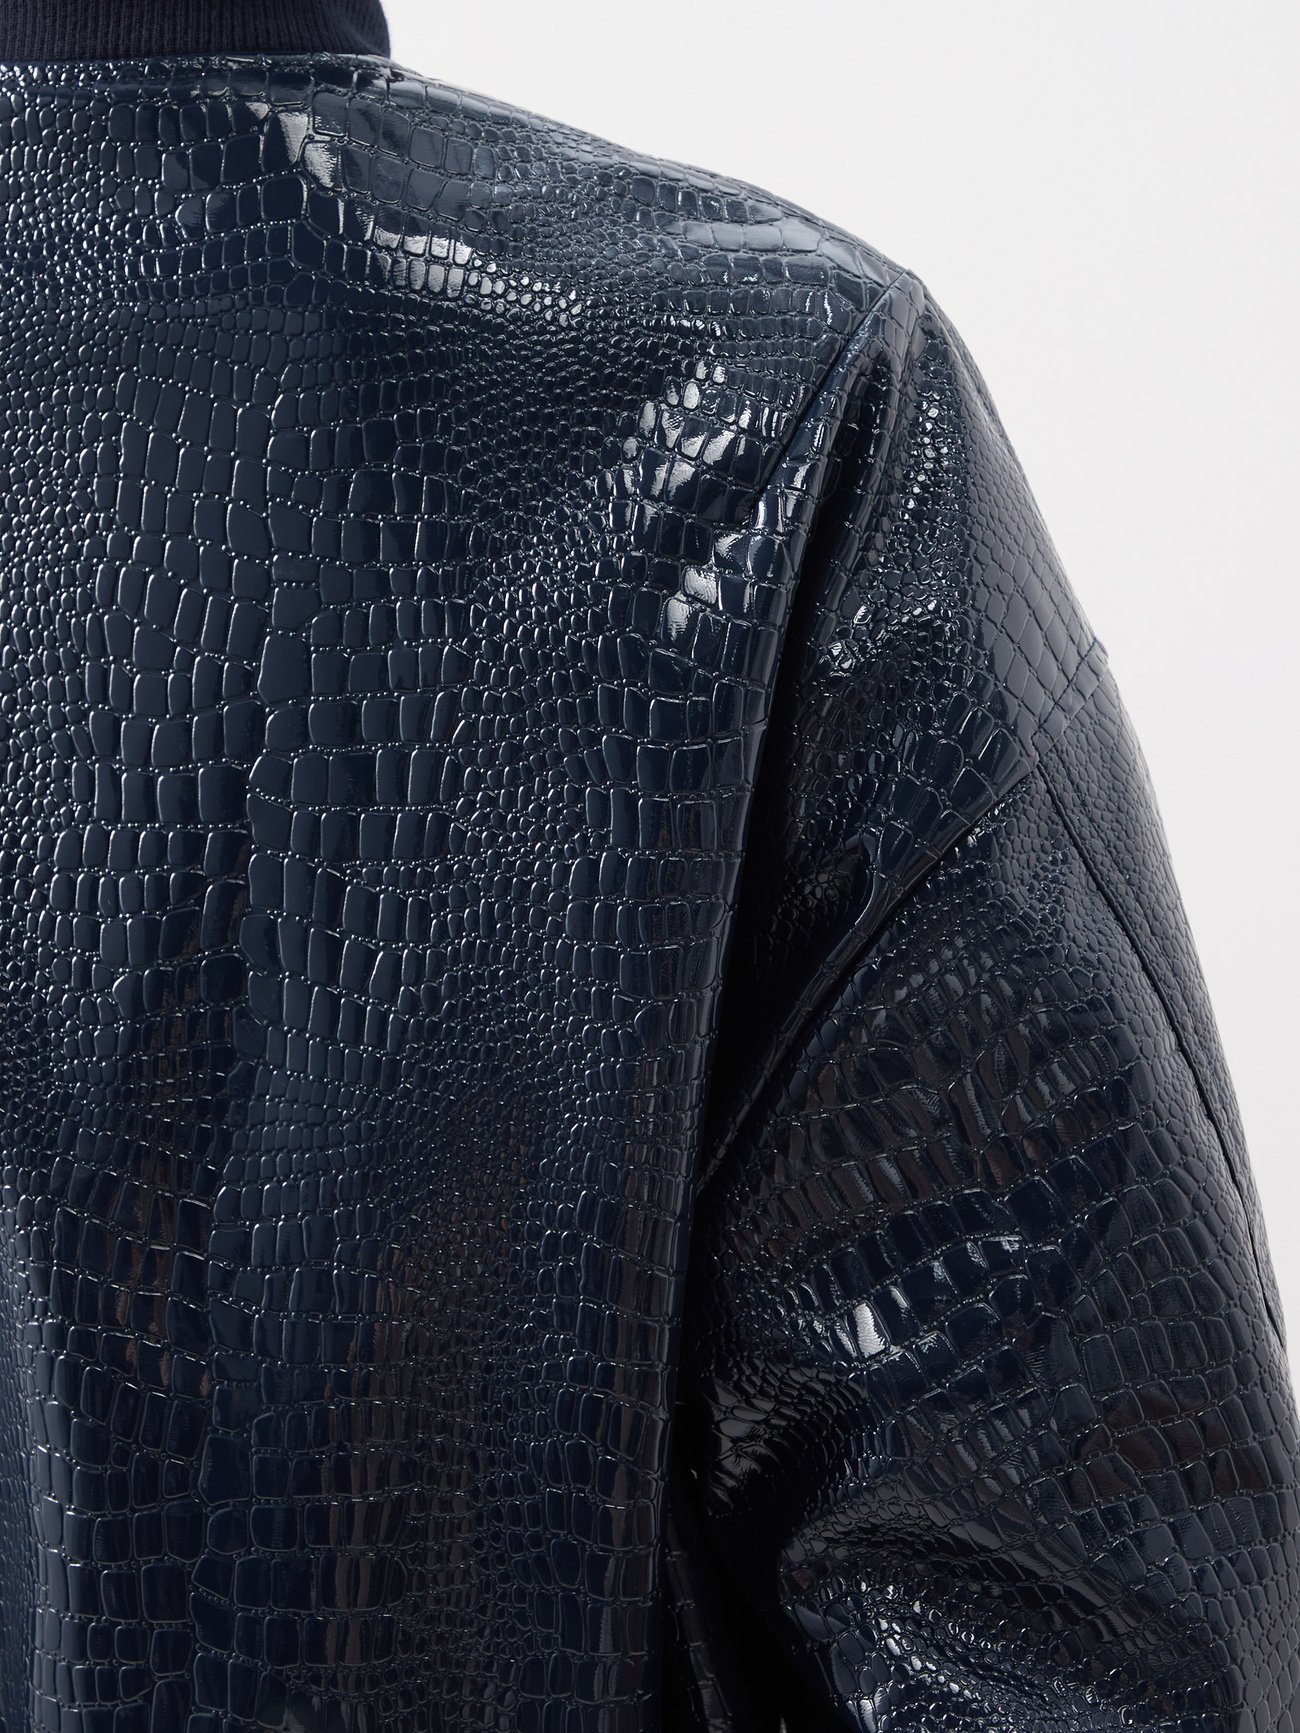 Croc Effect Faux Leather Jacket in Purple - Alaia